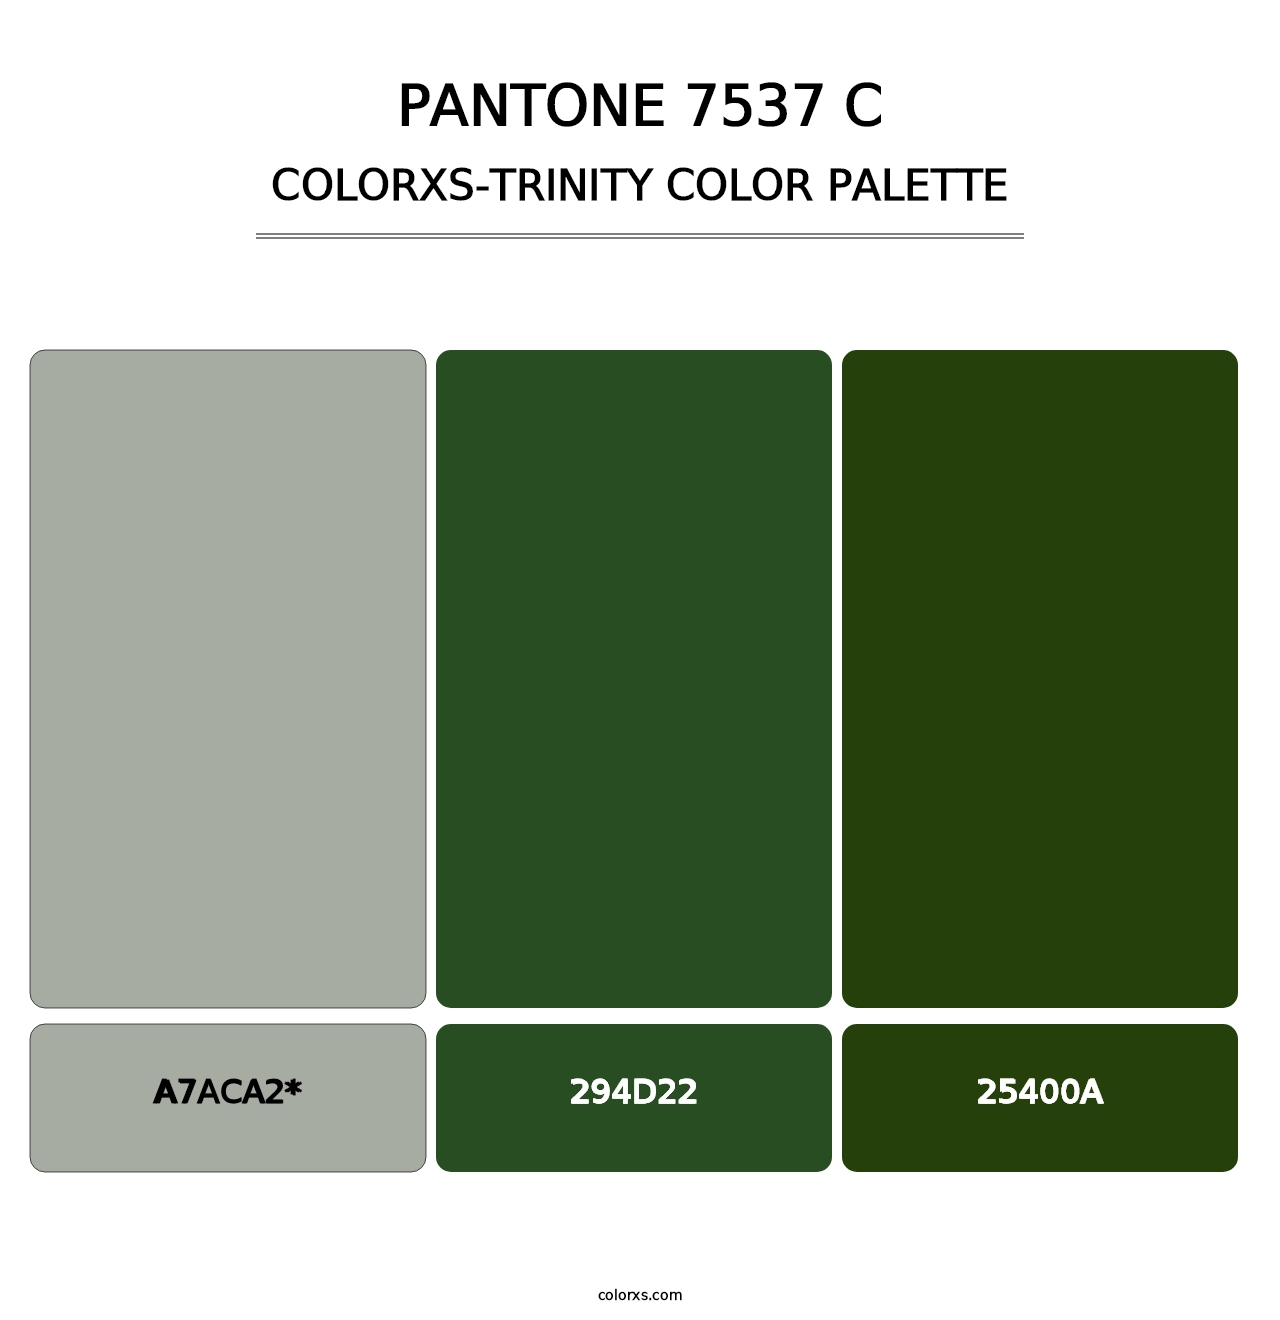 PANTONE 7537 C - Colorxs Trinity Palette